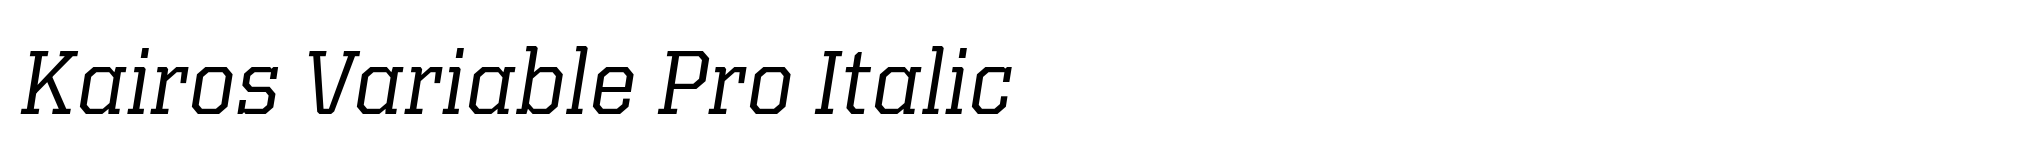 Kairos Variable Pro Italic image